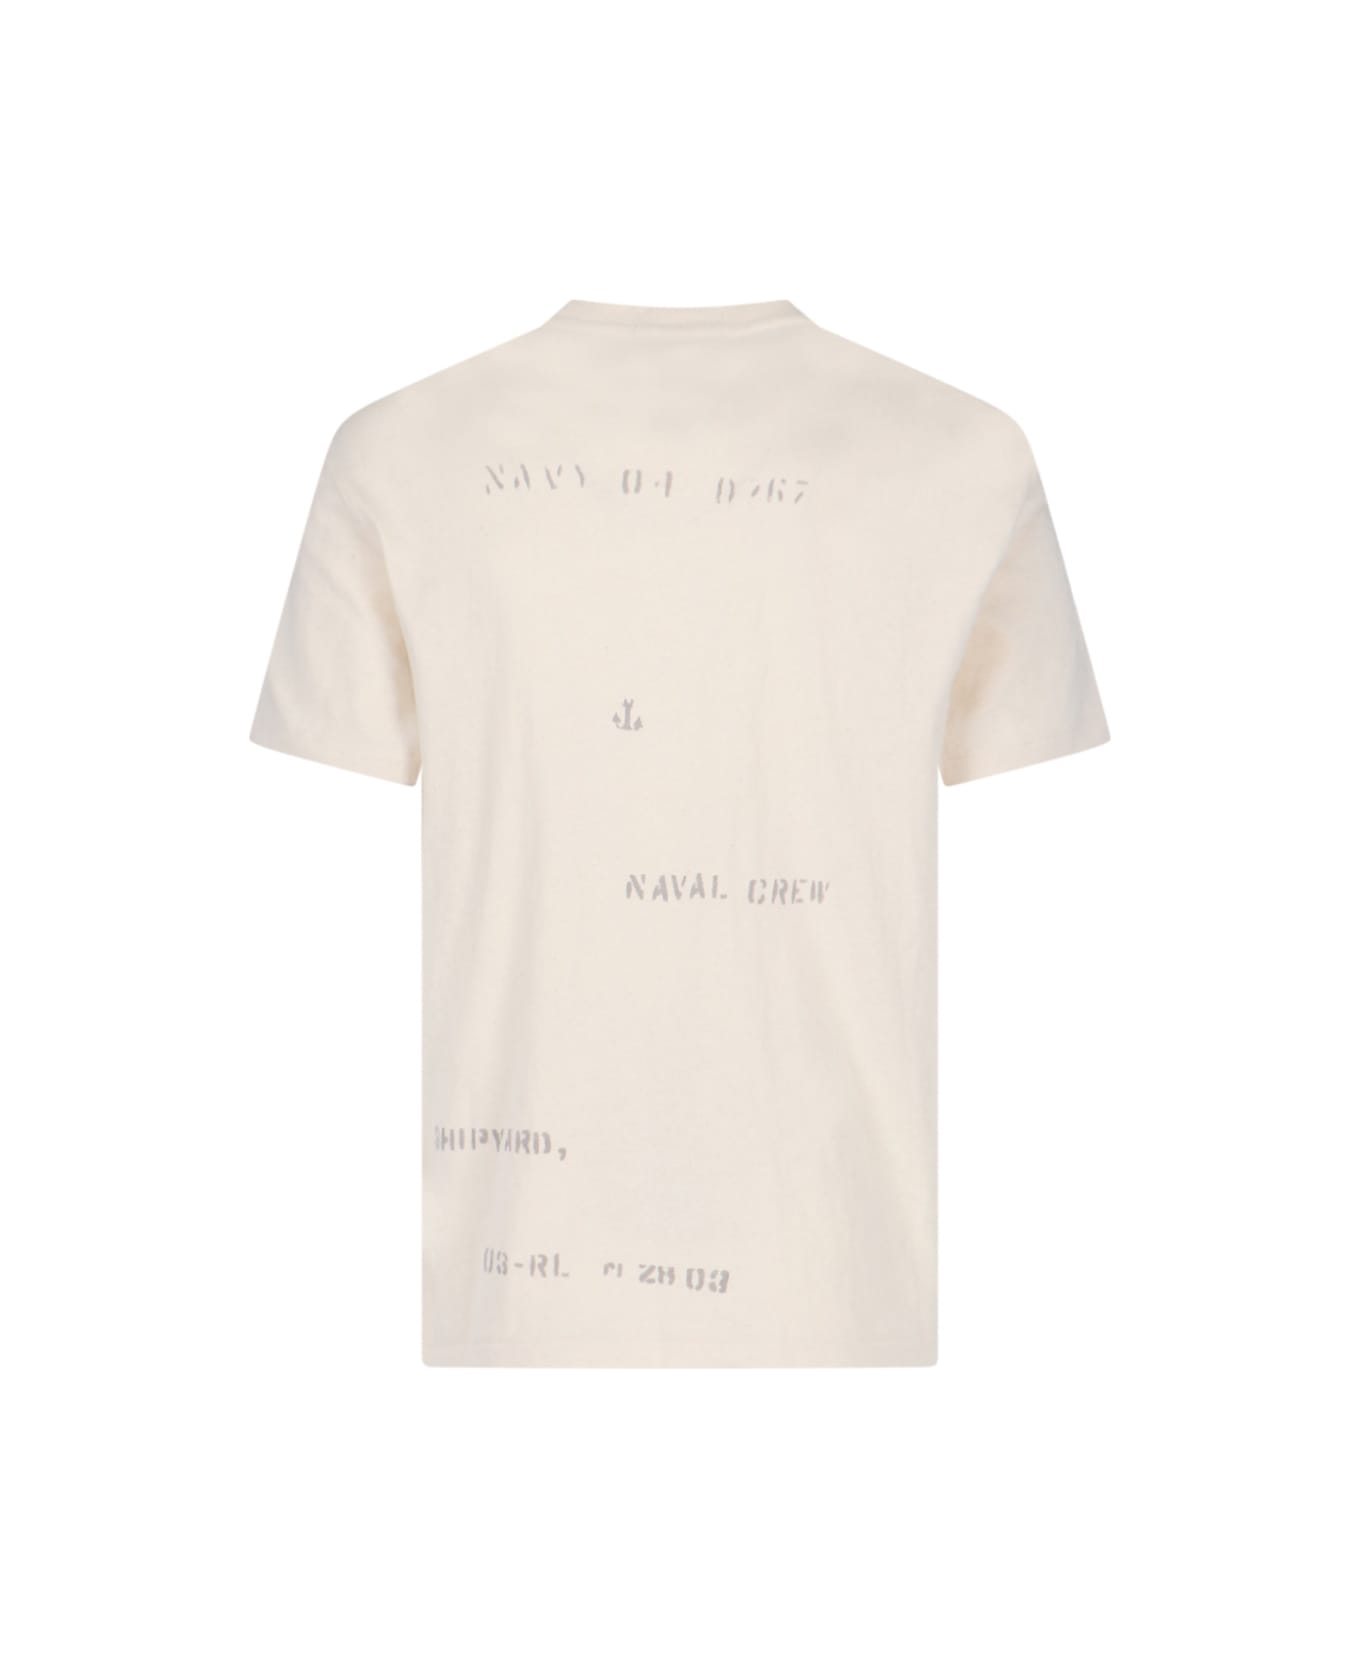 Polo Ralph Lauren 'polo Bear' T-shirt - Crema